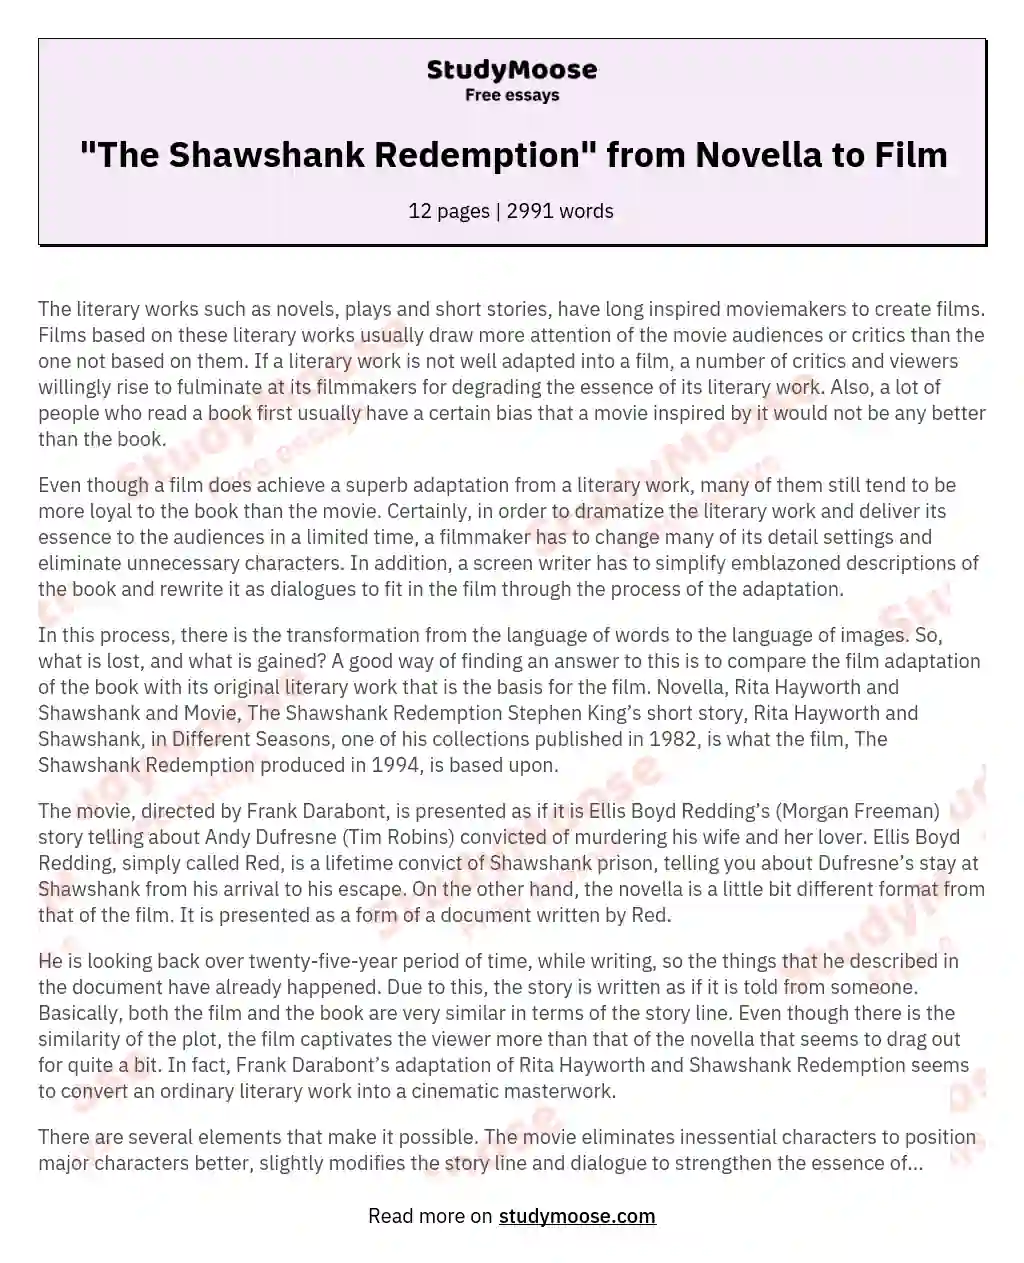 "The Shawshank Redemption" from Novella to Film essay